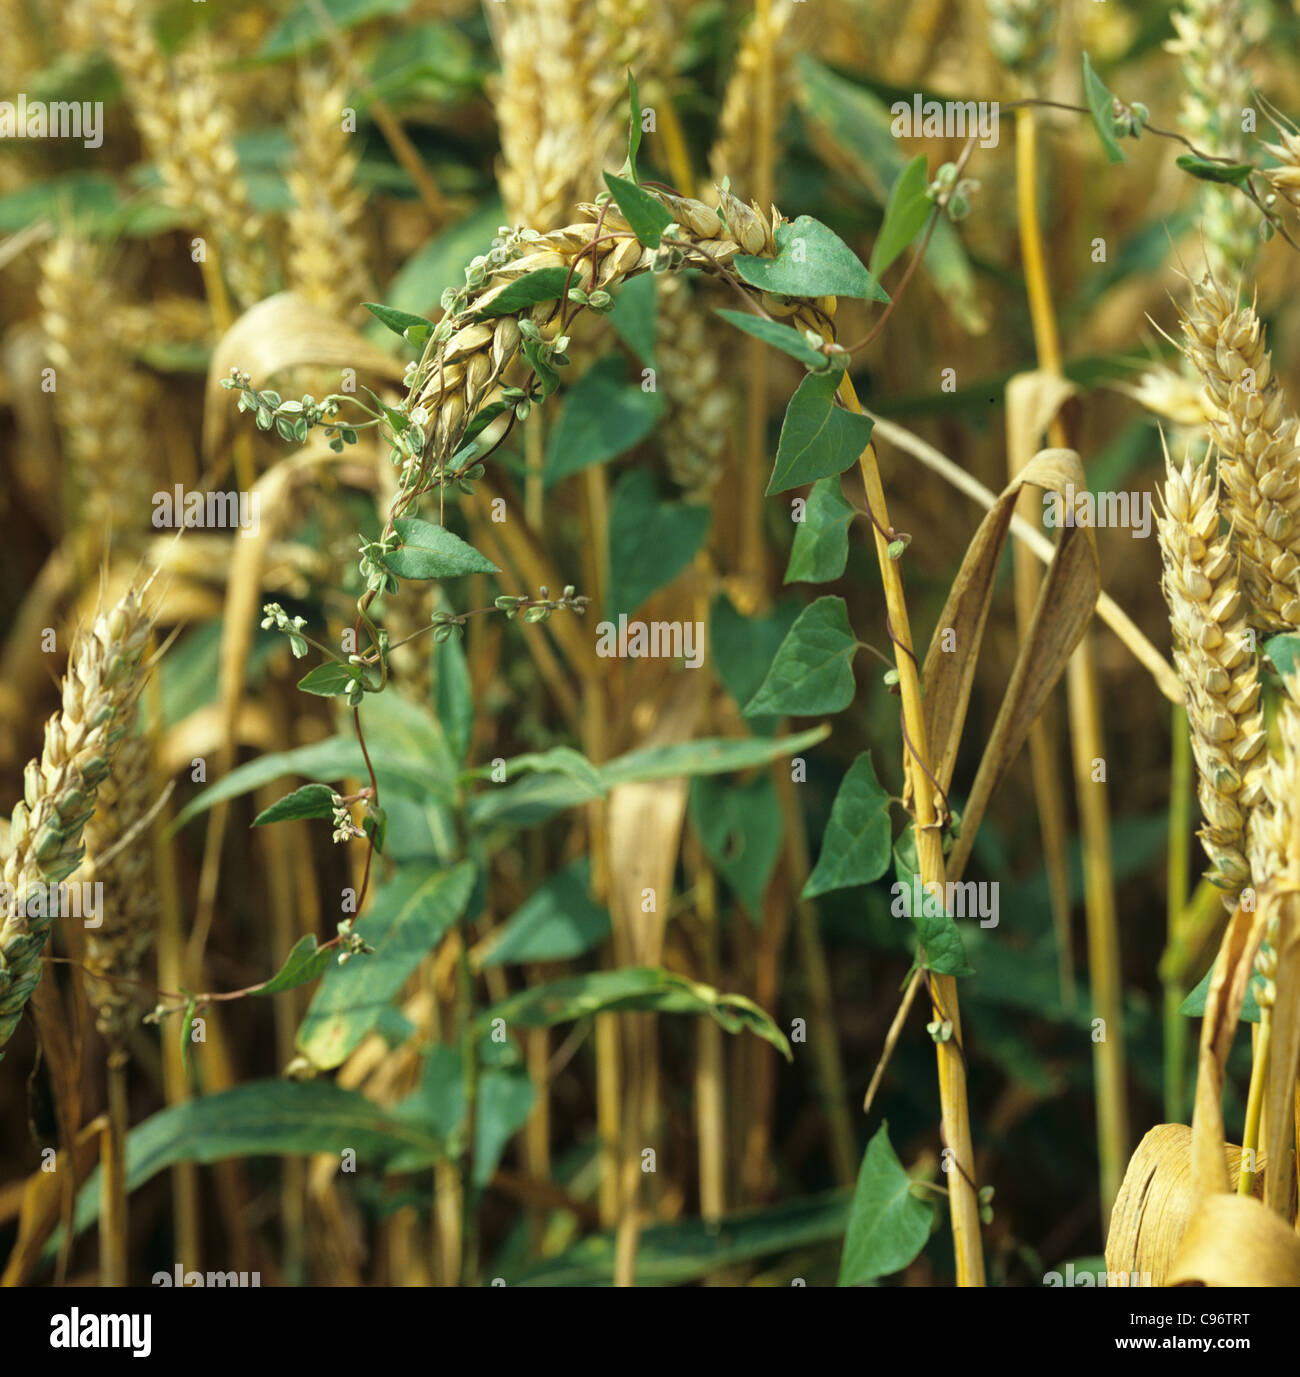 Black bindweed (Bilderdykia convolvulus) weeds climbing in ripe wheat crop Stock Photo